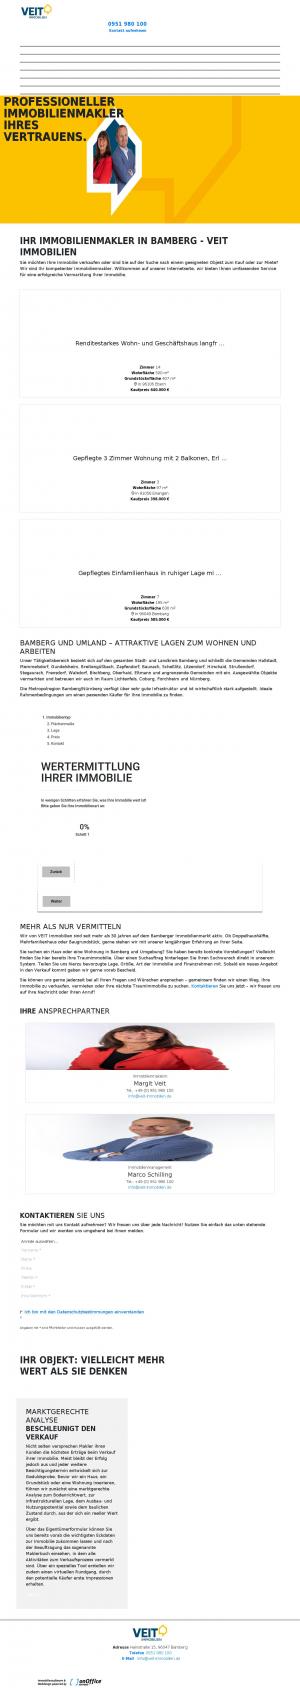 www.veit-immobilien.de